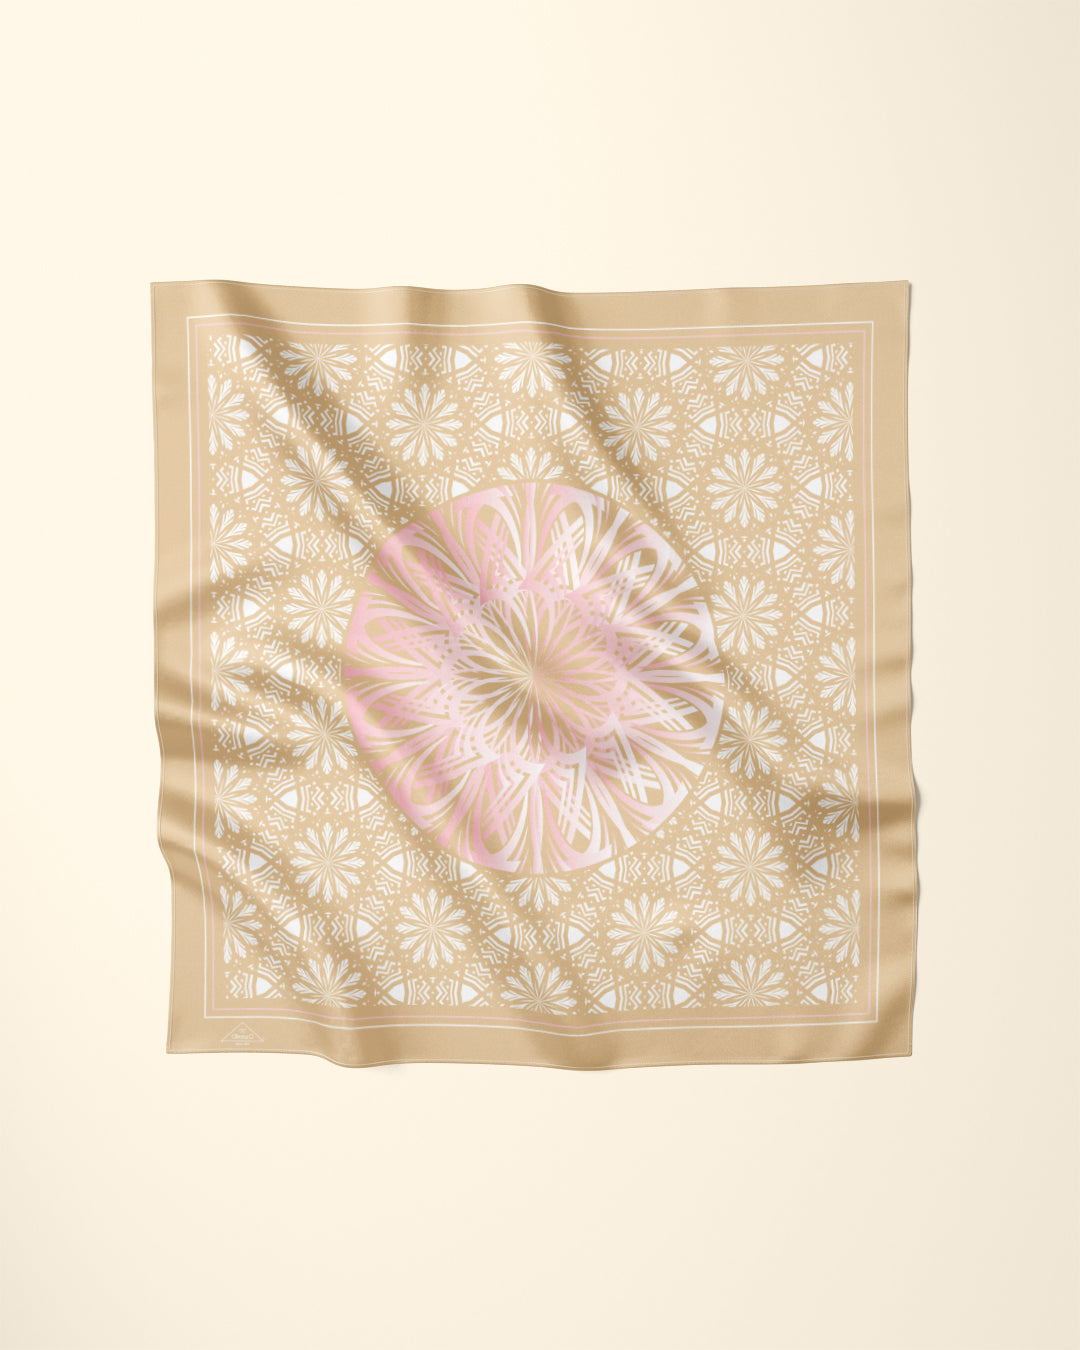 GLOWING Mandala Designer Silk Scarf Gold Pink by Alesia Chaika